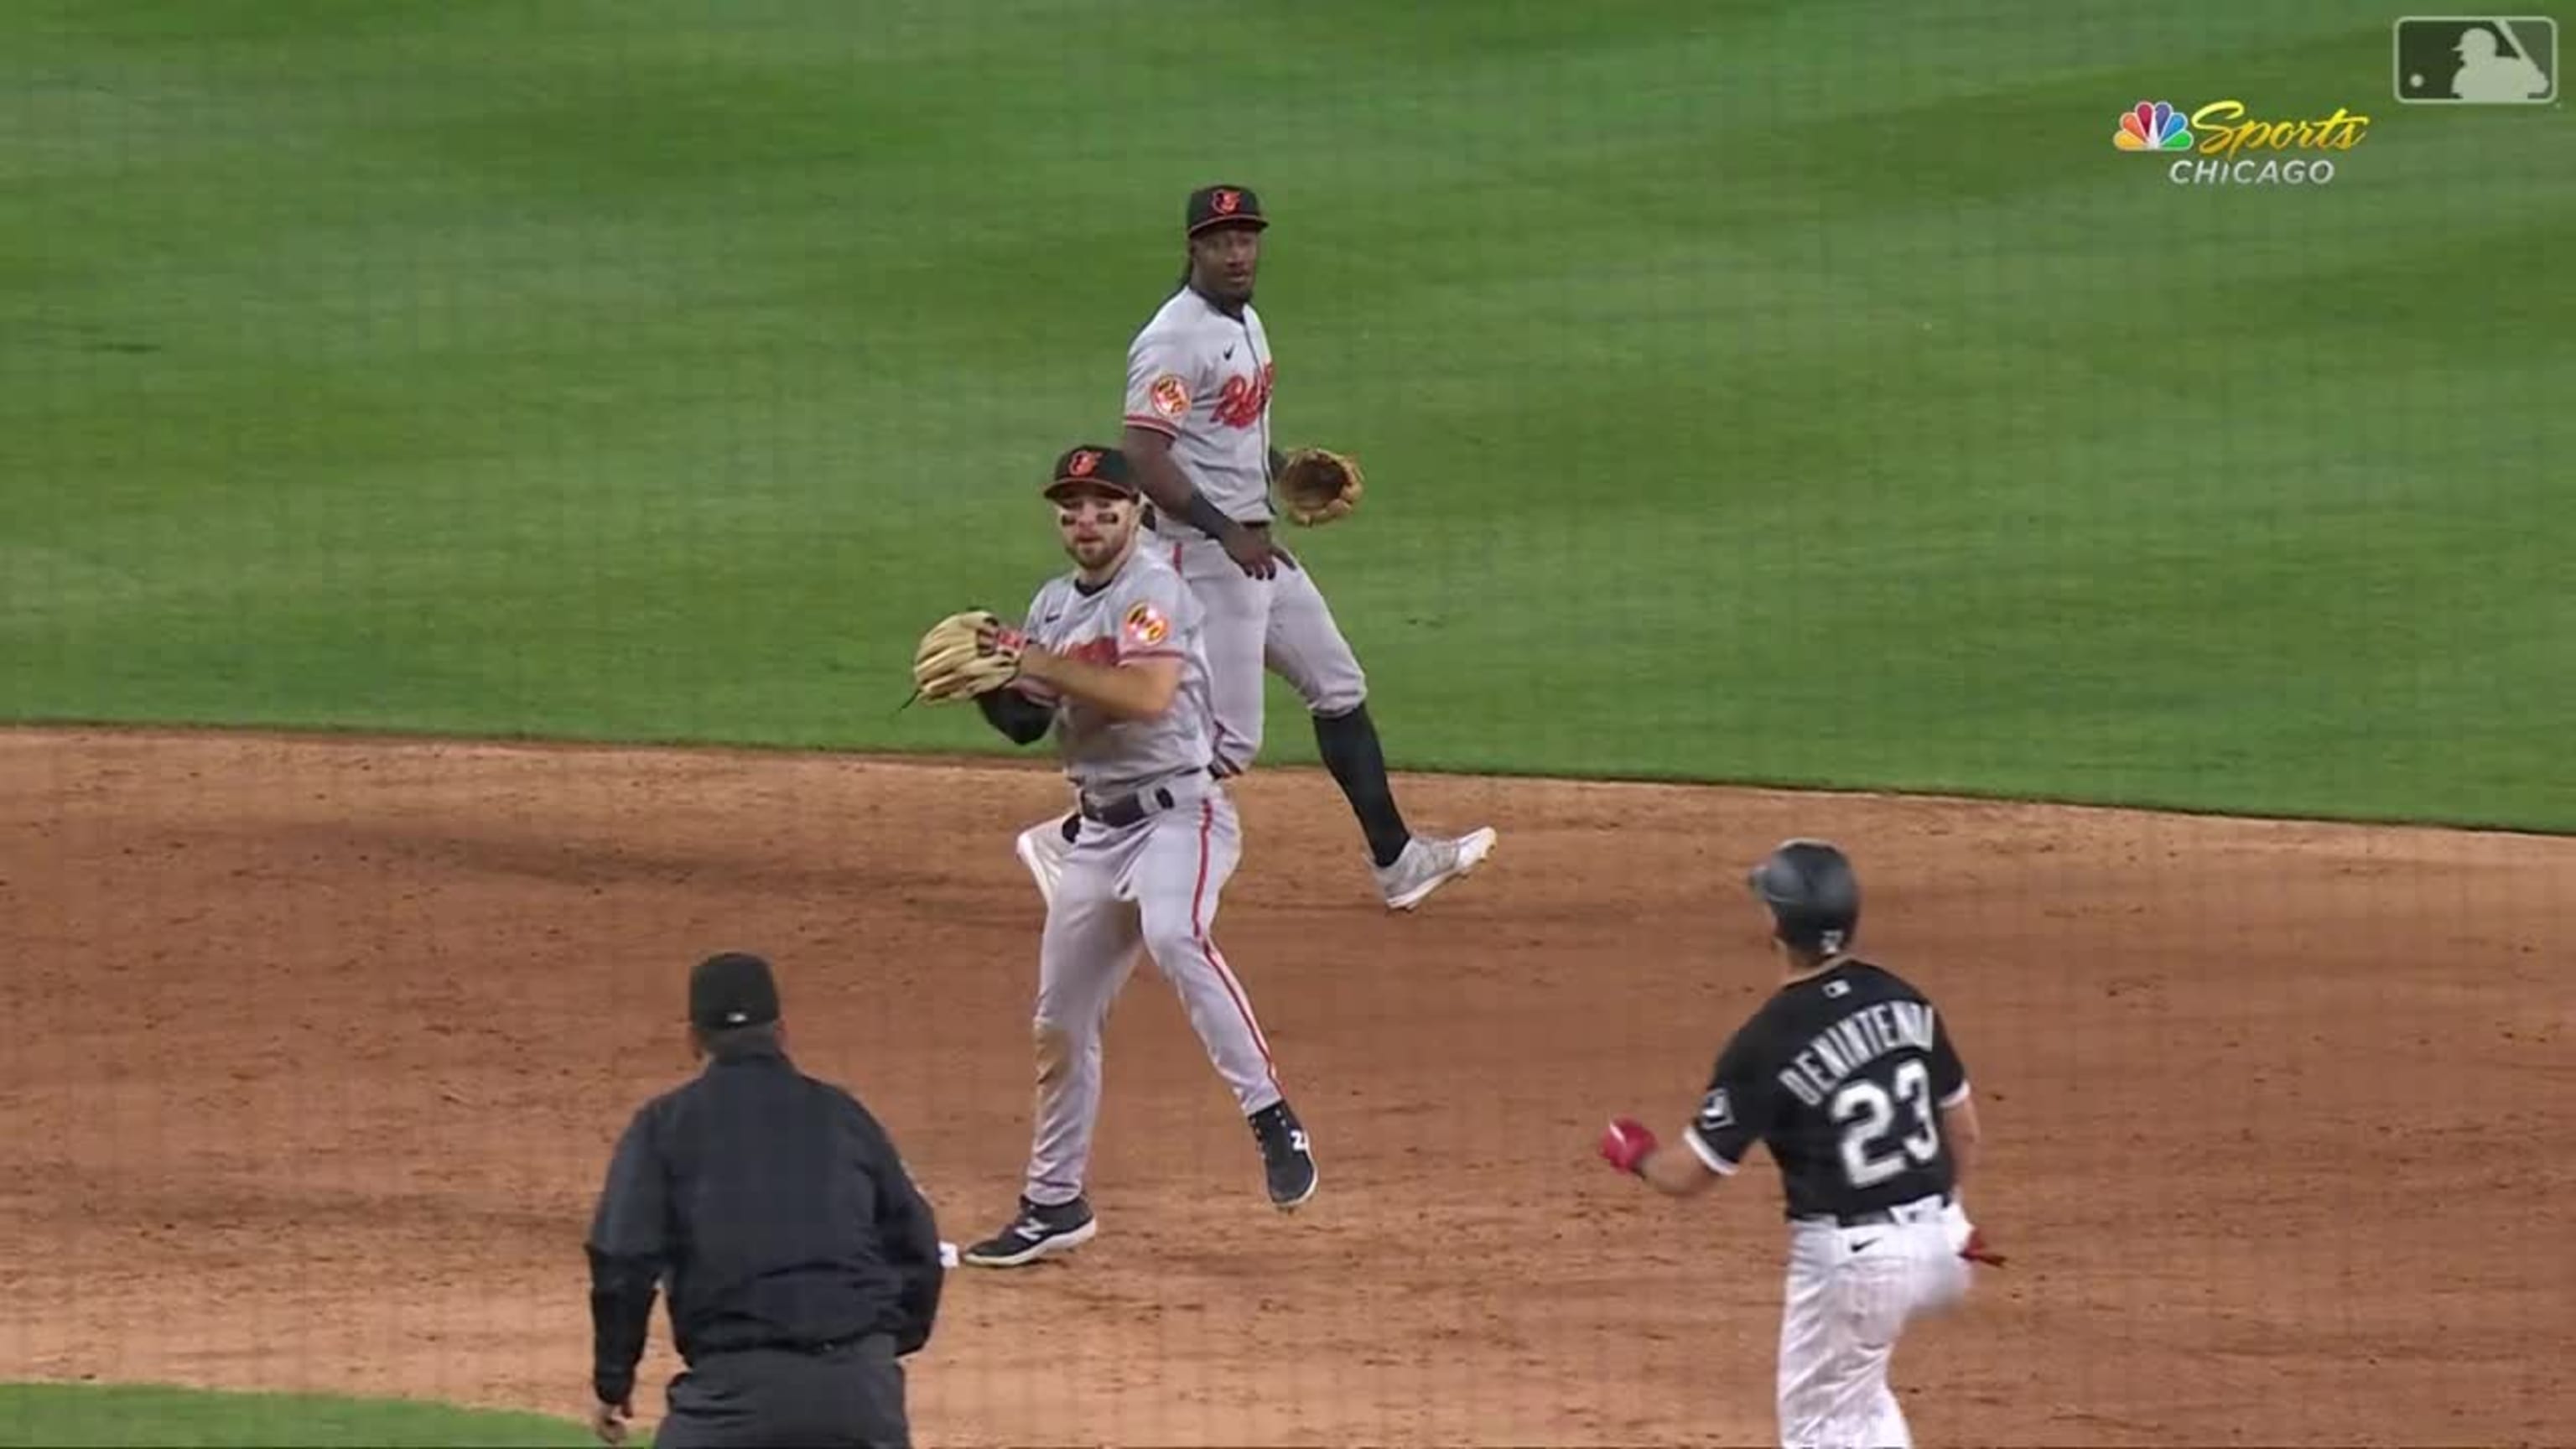 Rutschmann has big hit in Orioles' 6-3 win over White Sox - Newsday